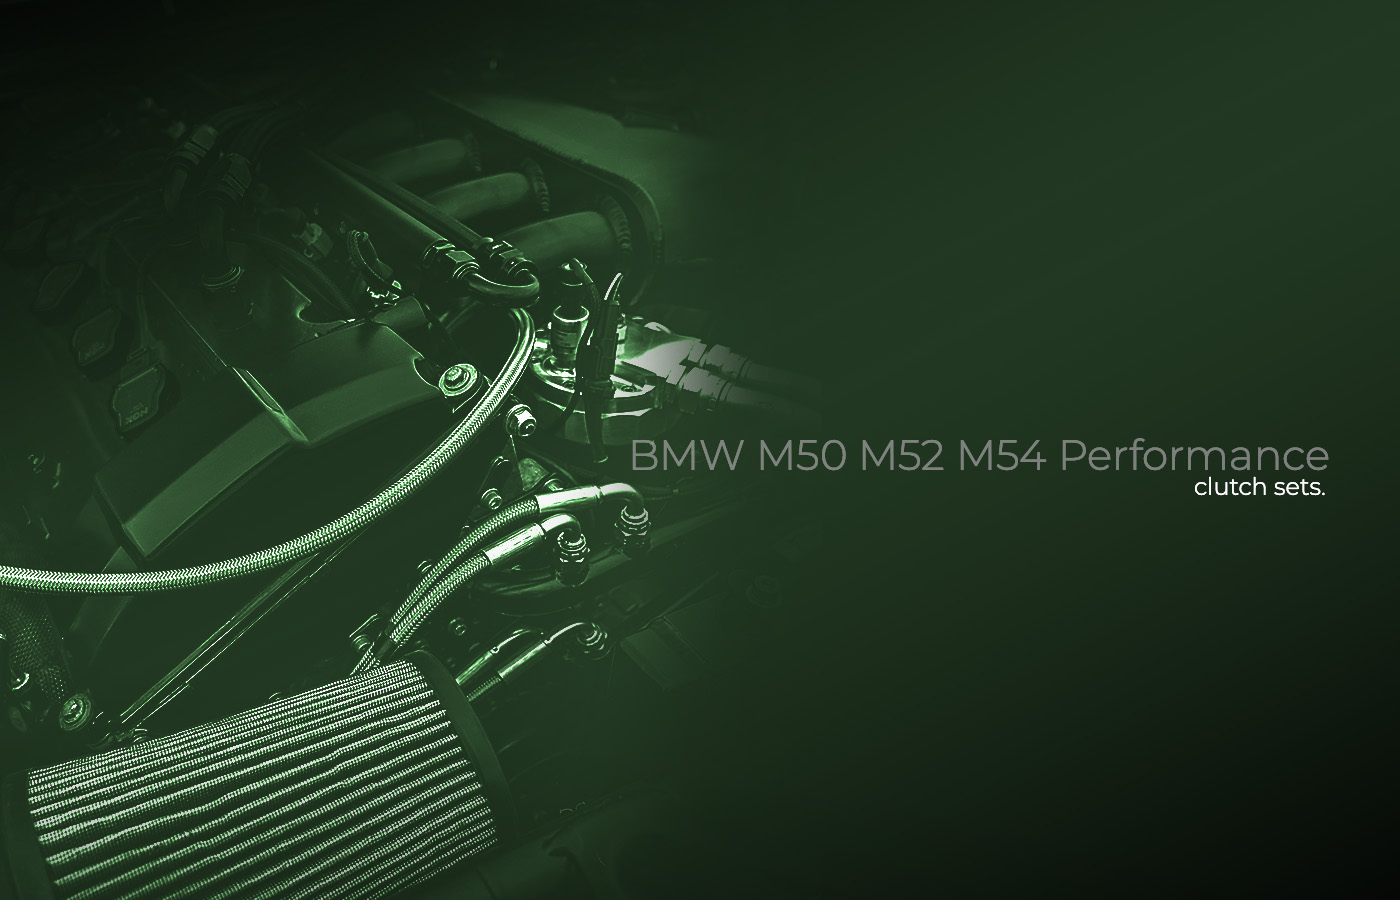 performance clutch sets bmw m50 m52 m54